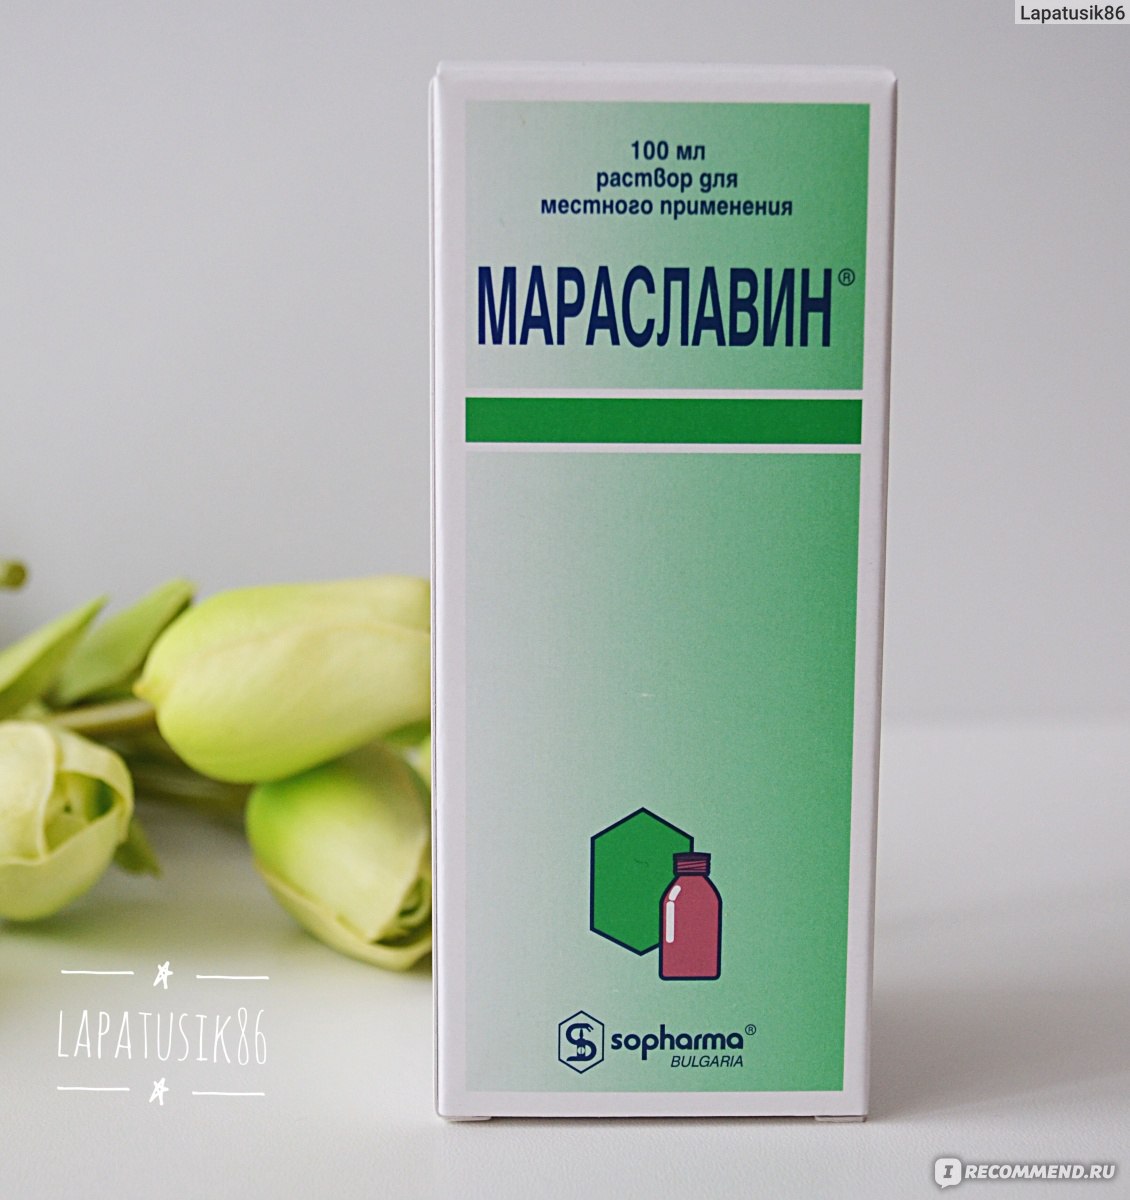 Лекарственный препарат Средство для лечения дёсен Мараславин sopharma .